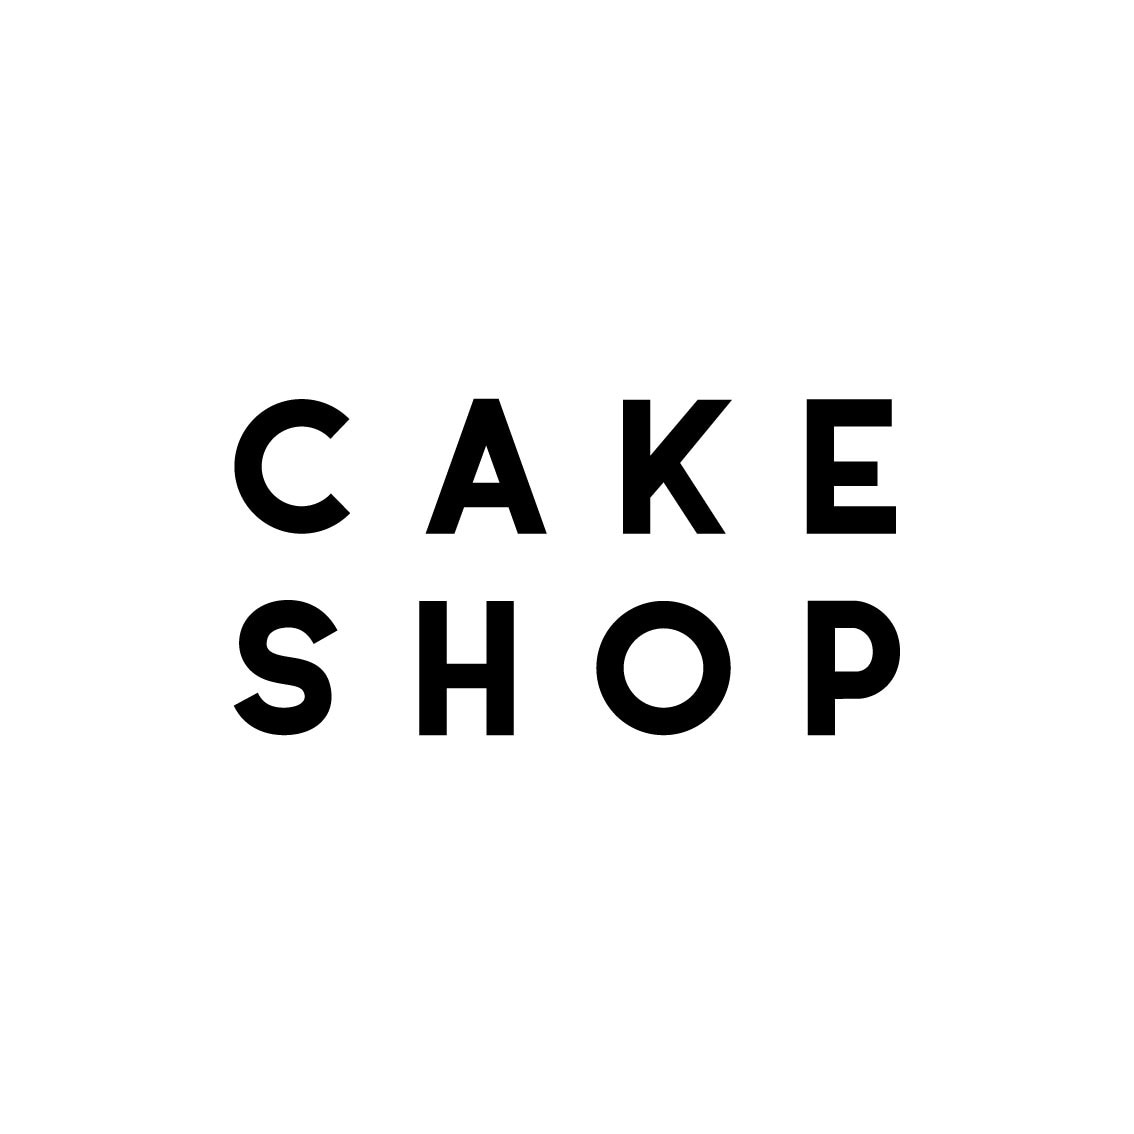 CAKE SHOP